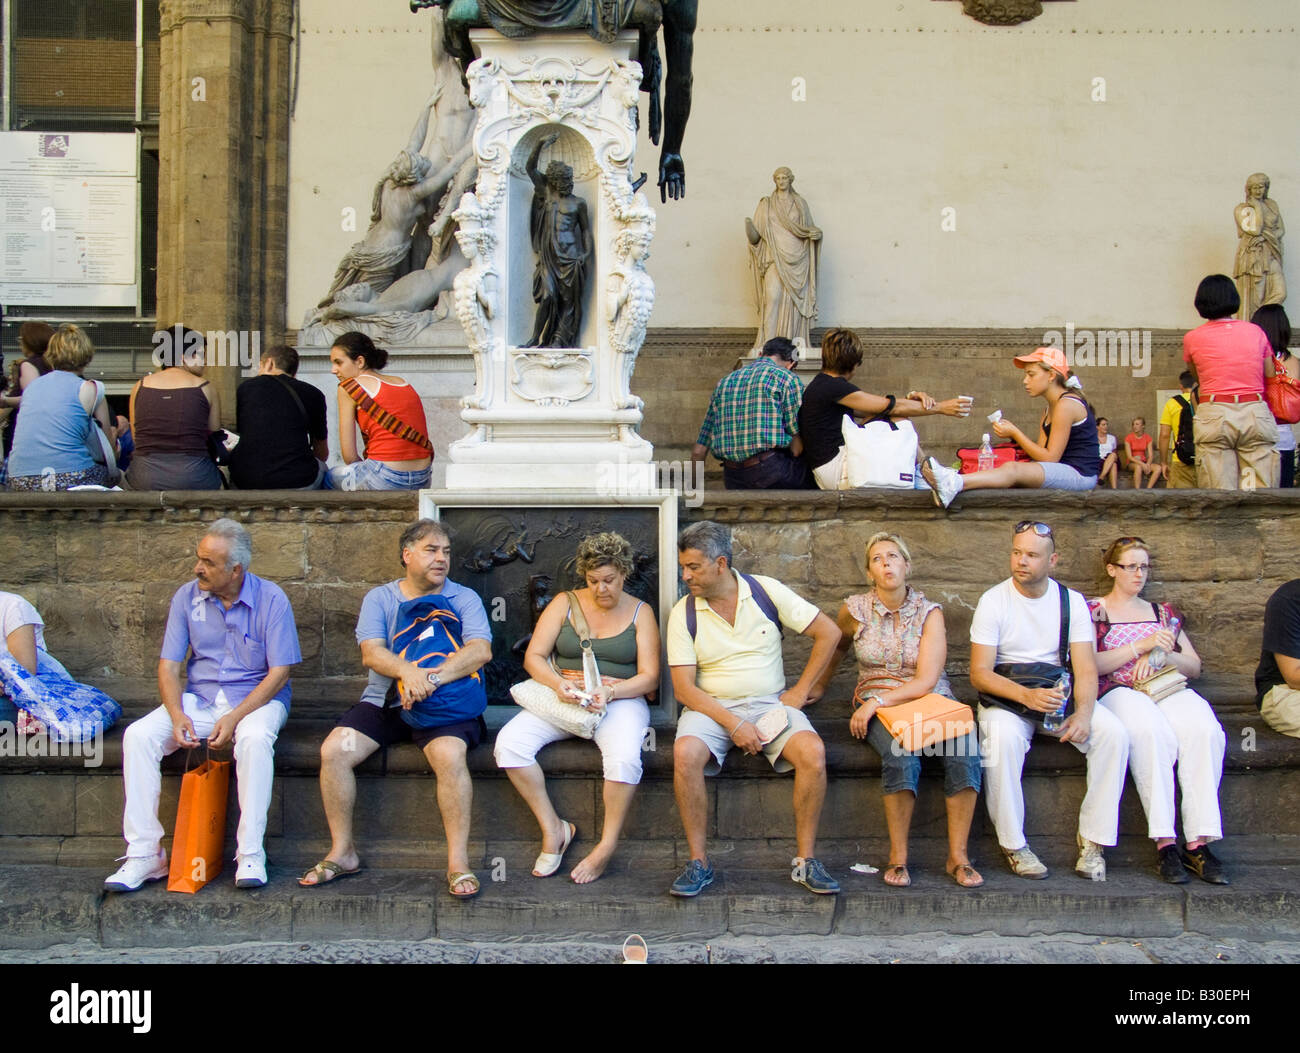 Vacanzieri,turist gente seduta rilassante in Piazza Signoria Firenze Italia estate 08 Foto Stock